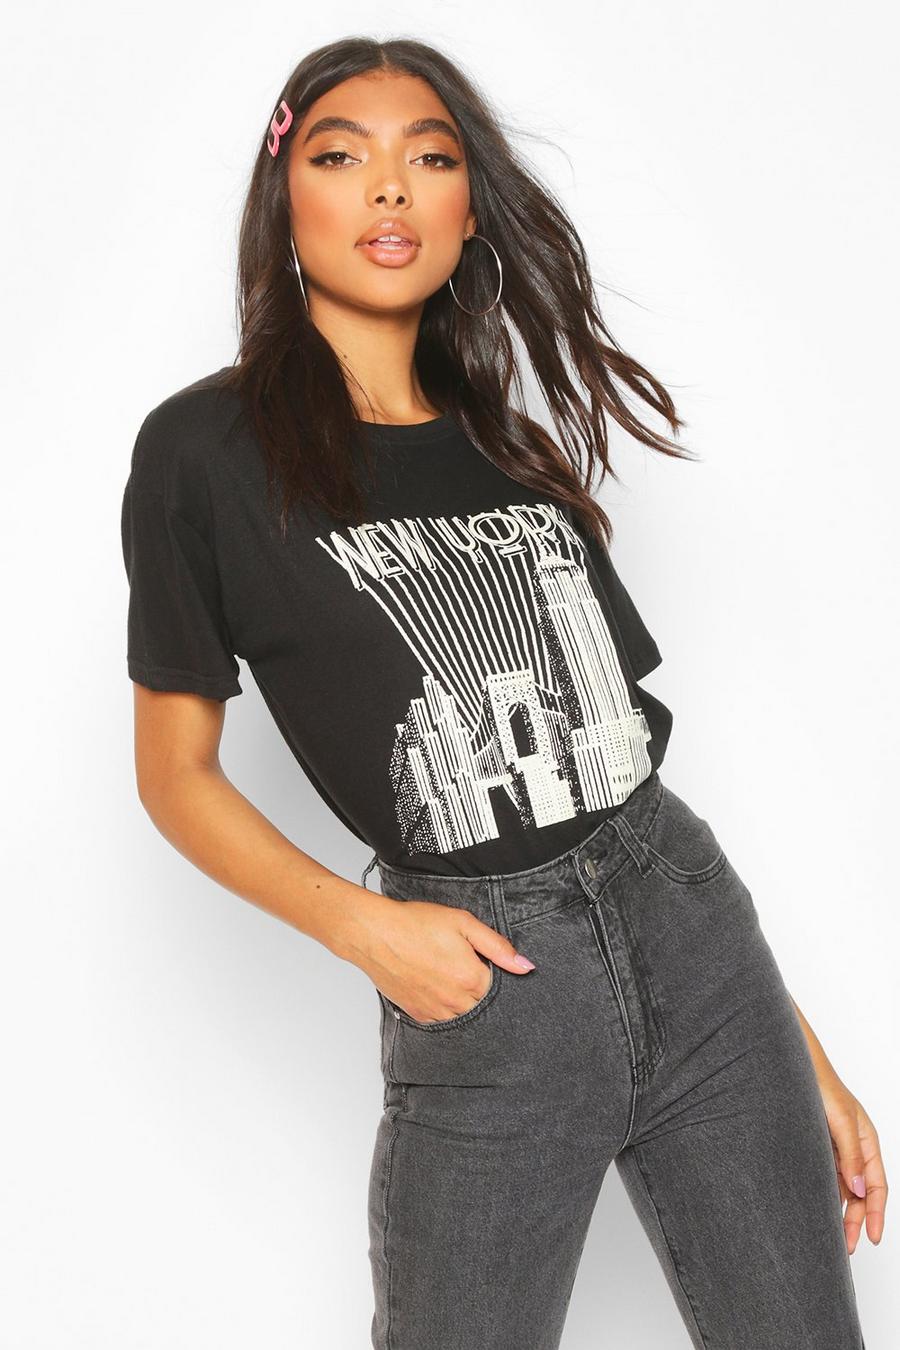 T-shirt Skyline de New York - Tall image number 1